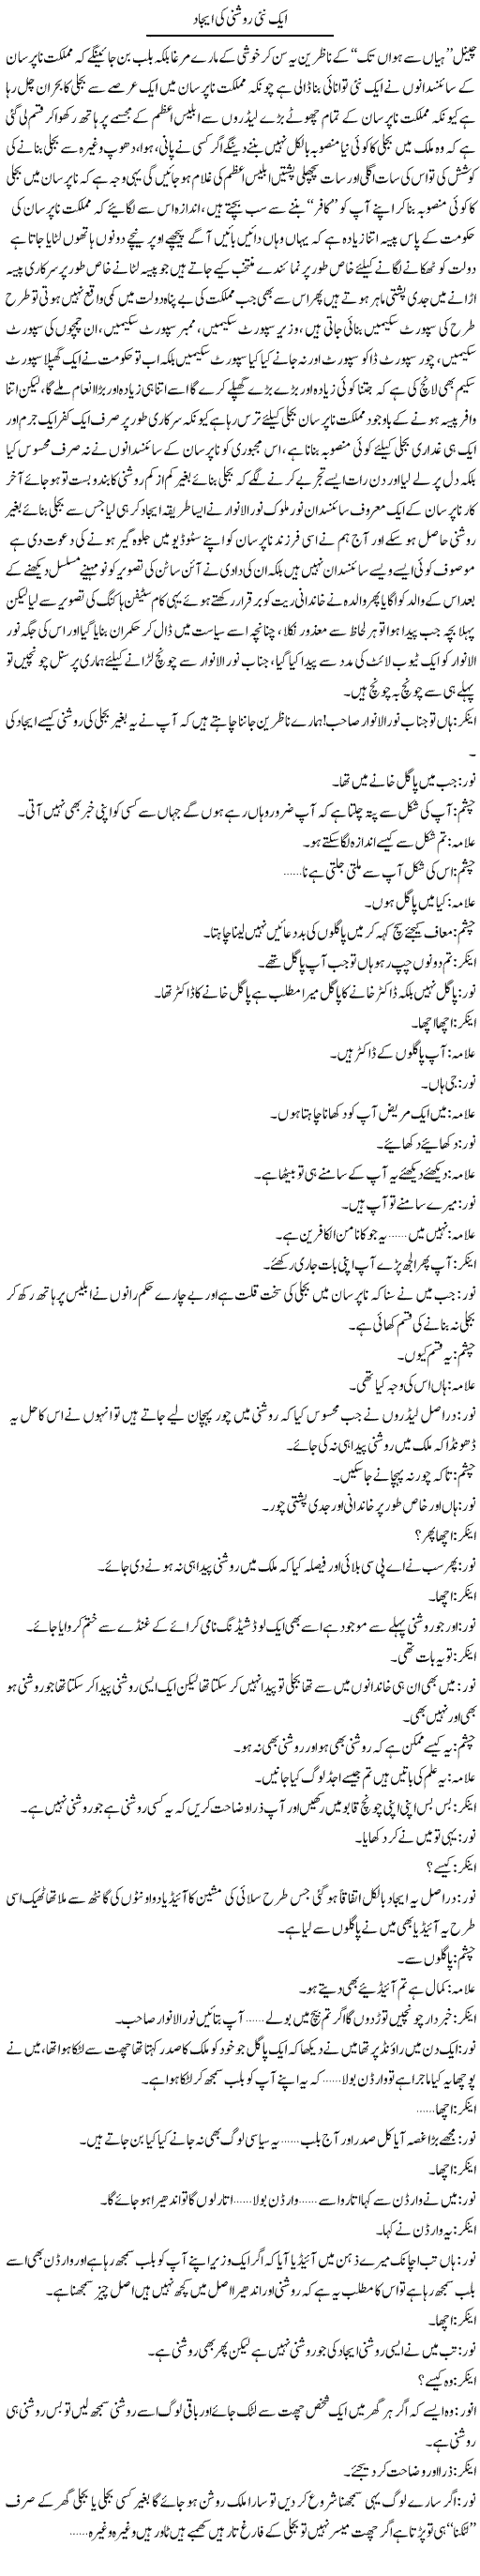 Aik Nai Roshni Ki Ejaad | Saad Ullah Jan Barq | Daily Urdu Columns